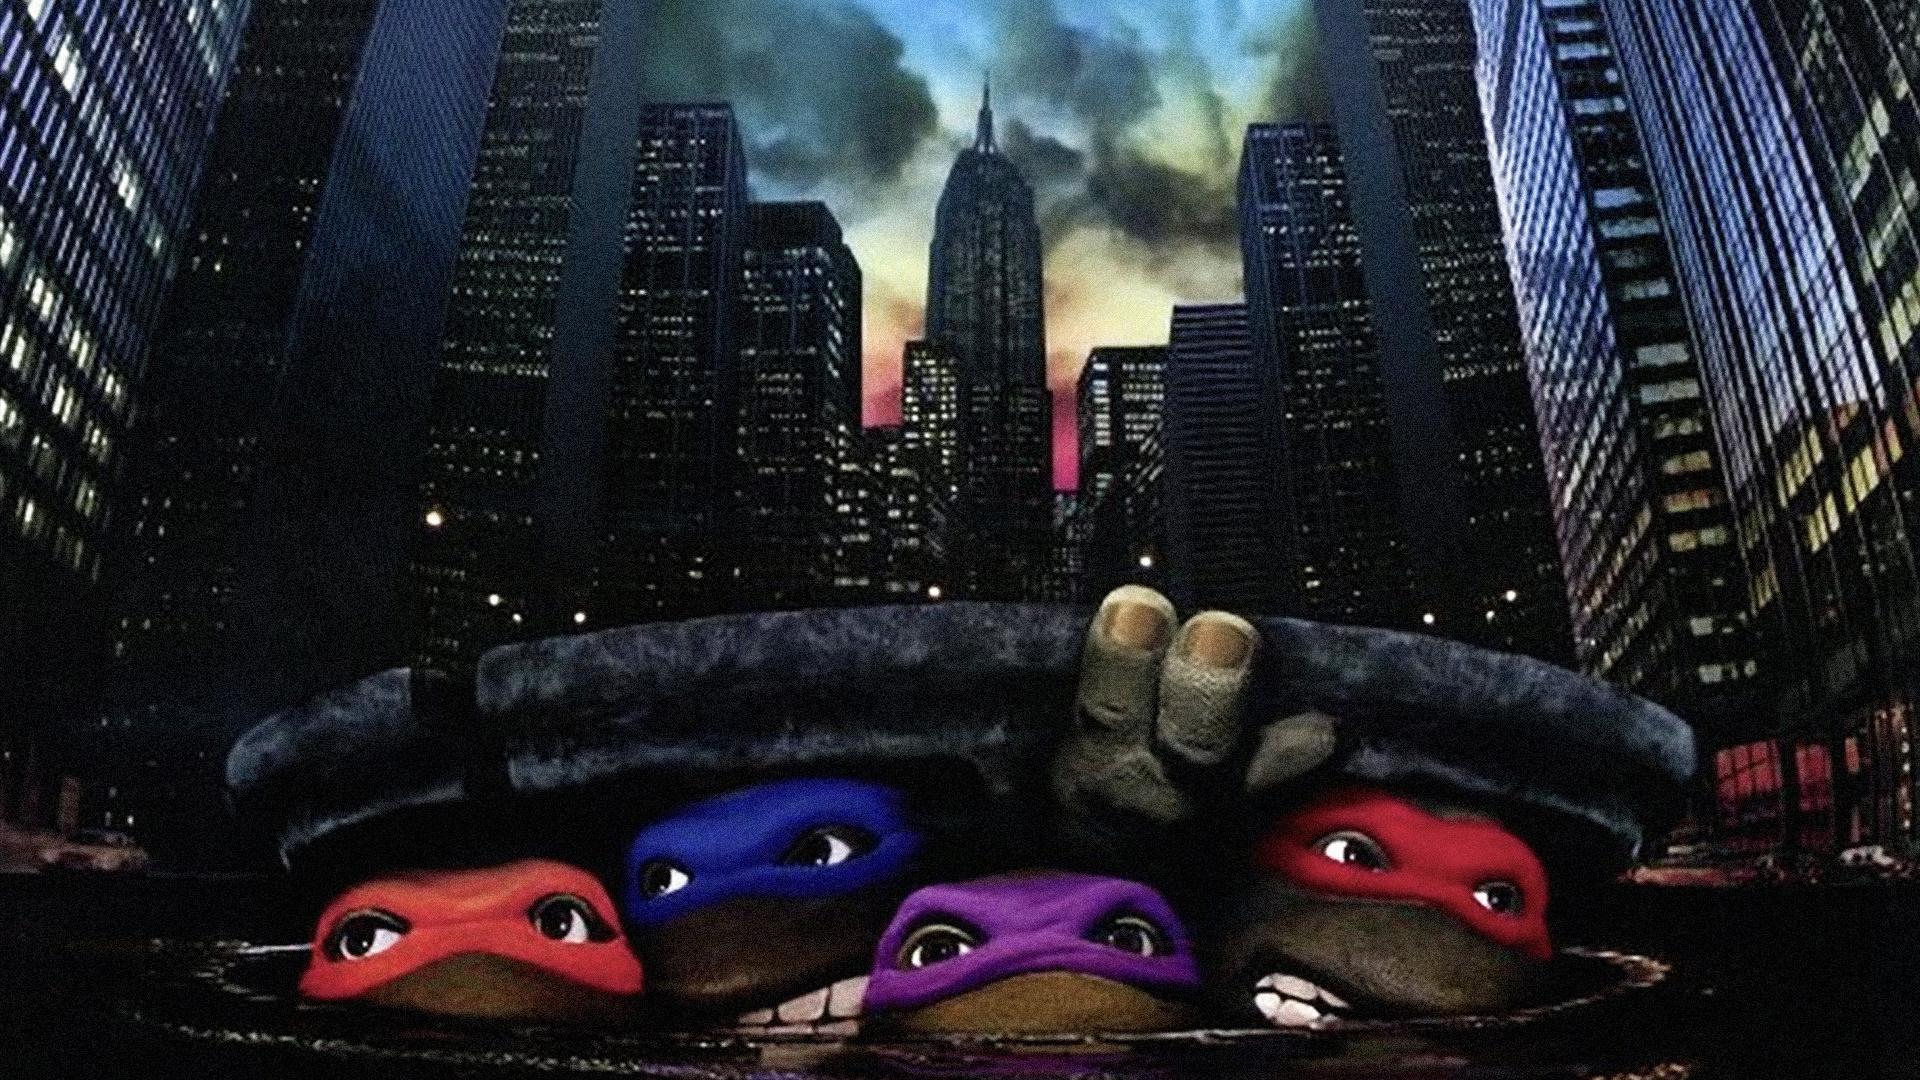 Sunça no cinema — As Tartarugas Ninjas (1990)